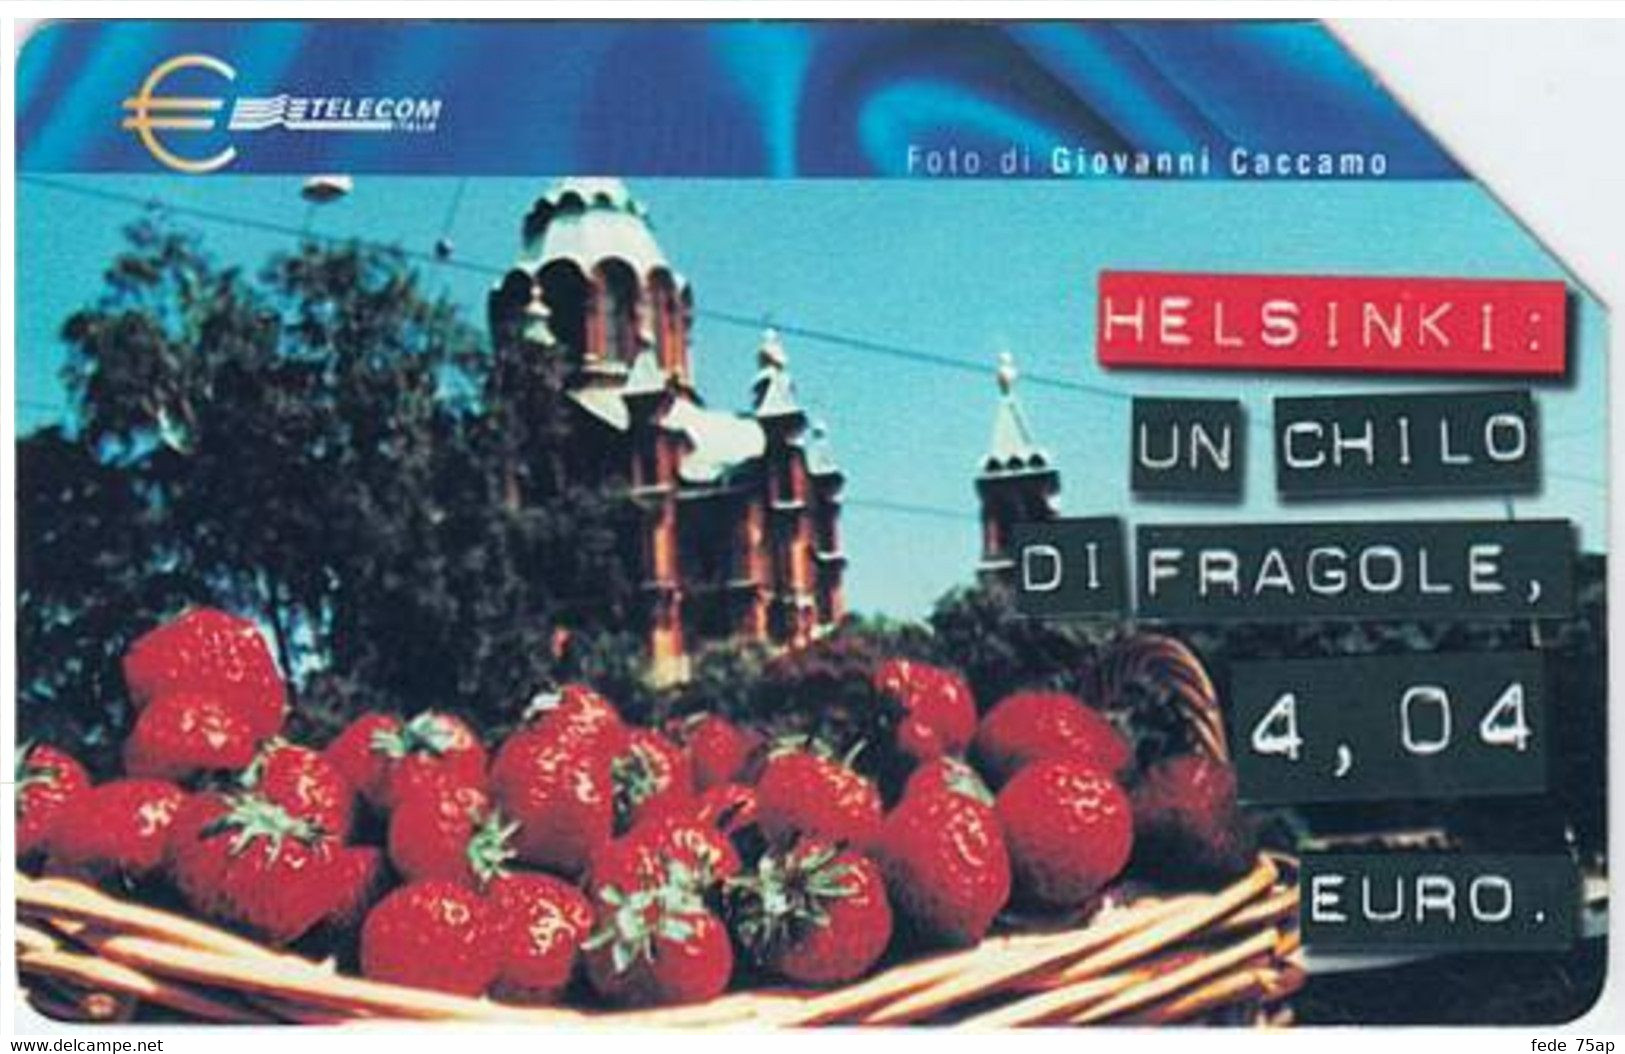 Scheda Telefonica TELECOM ITALIA "EURO - HELSINKI" - Catalogo Golden Lira Nr. 1089, Usata - Food